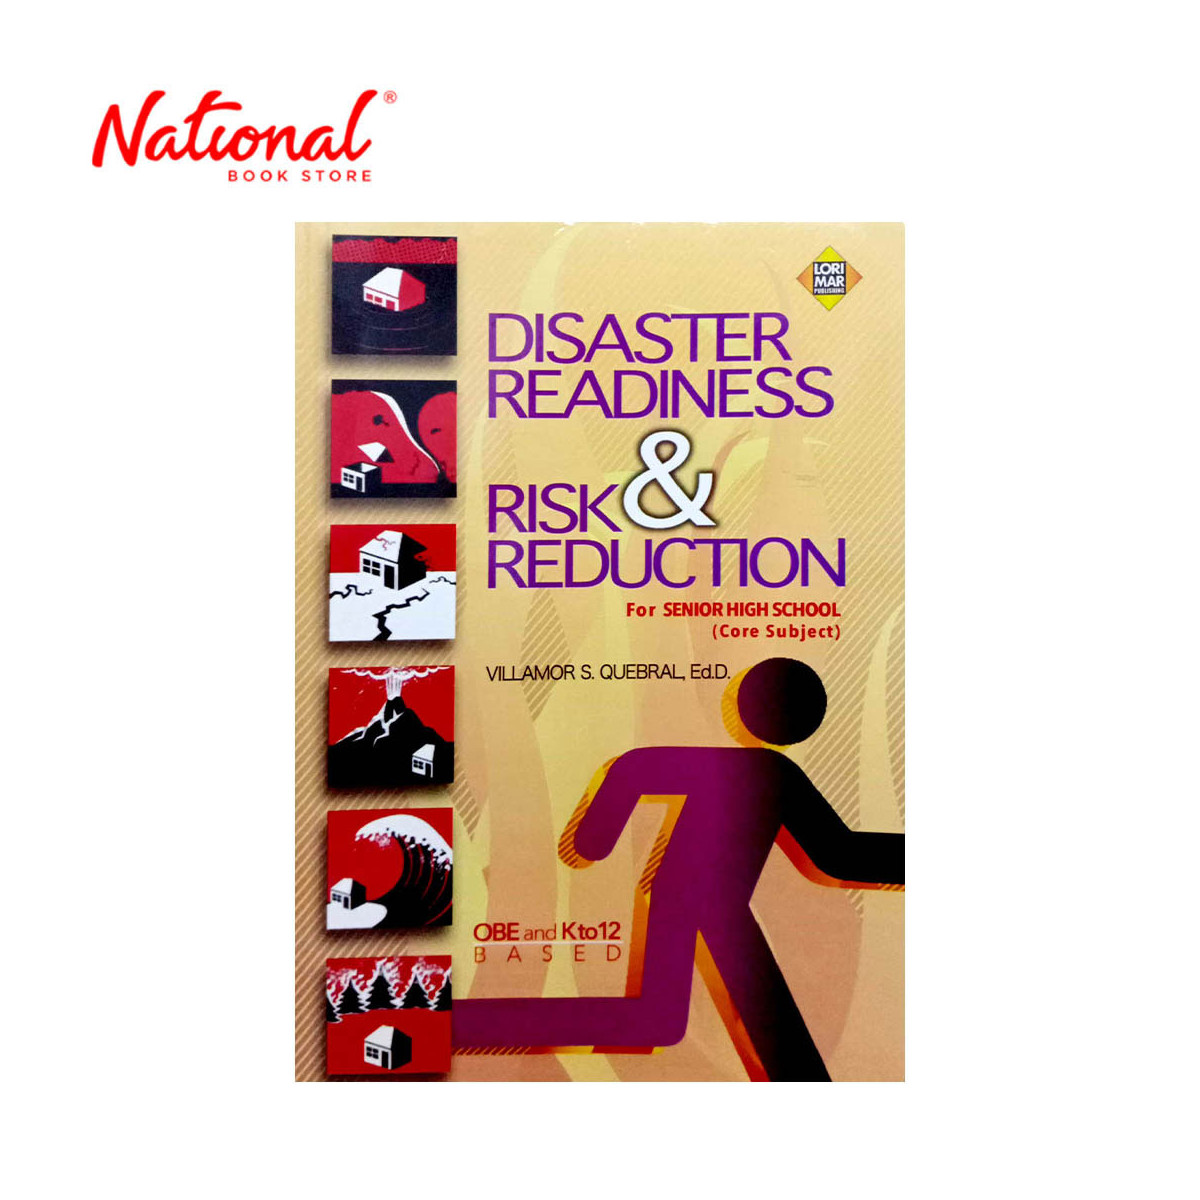 Disaster Readiness Risk & Reduction for Senior High School by Villamor S. Quebral - Trade Paperback